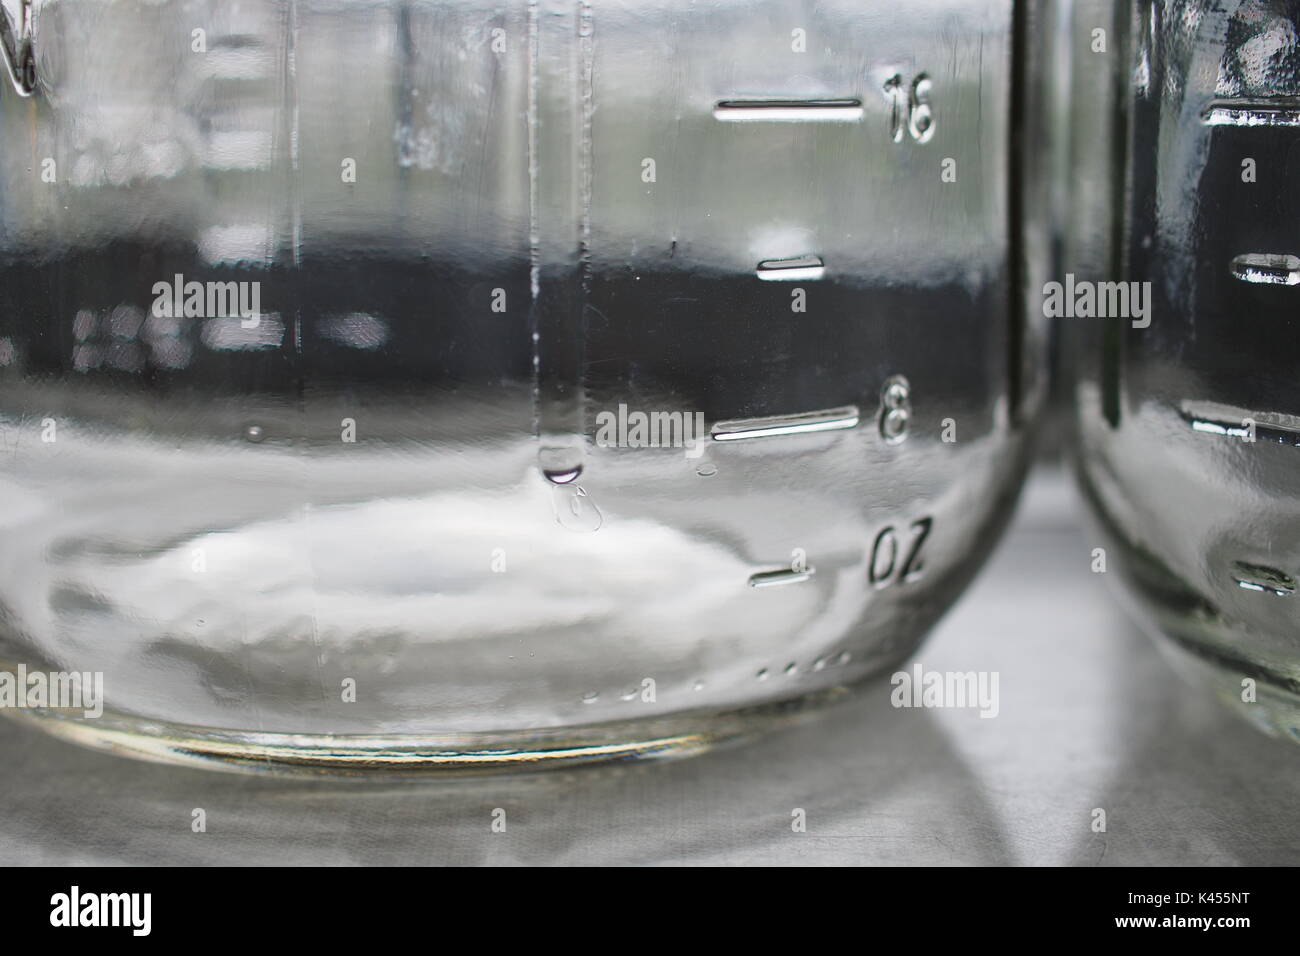 https://c8.alamy.com/comp/K455NT/close-up-of-two-glass-storage-mason-jars-on-a-ledge-showing-the-liquid-K455NT.jpg